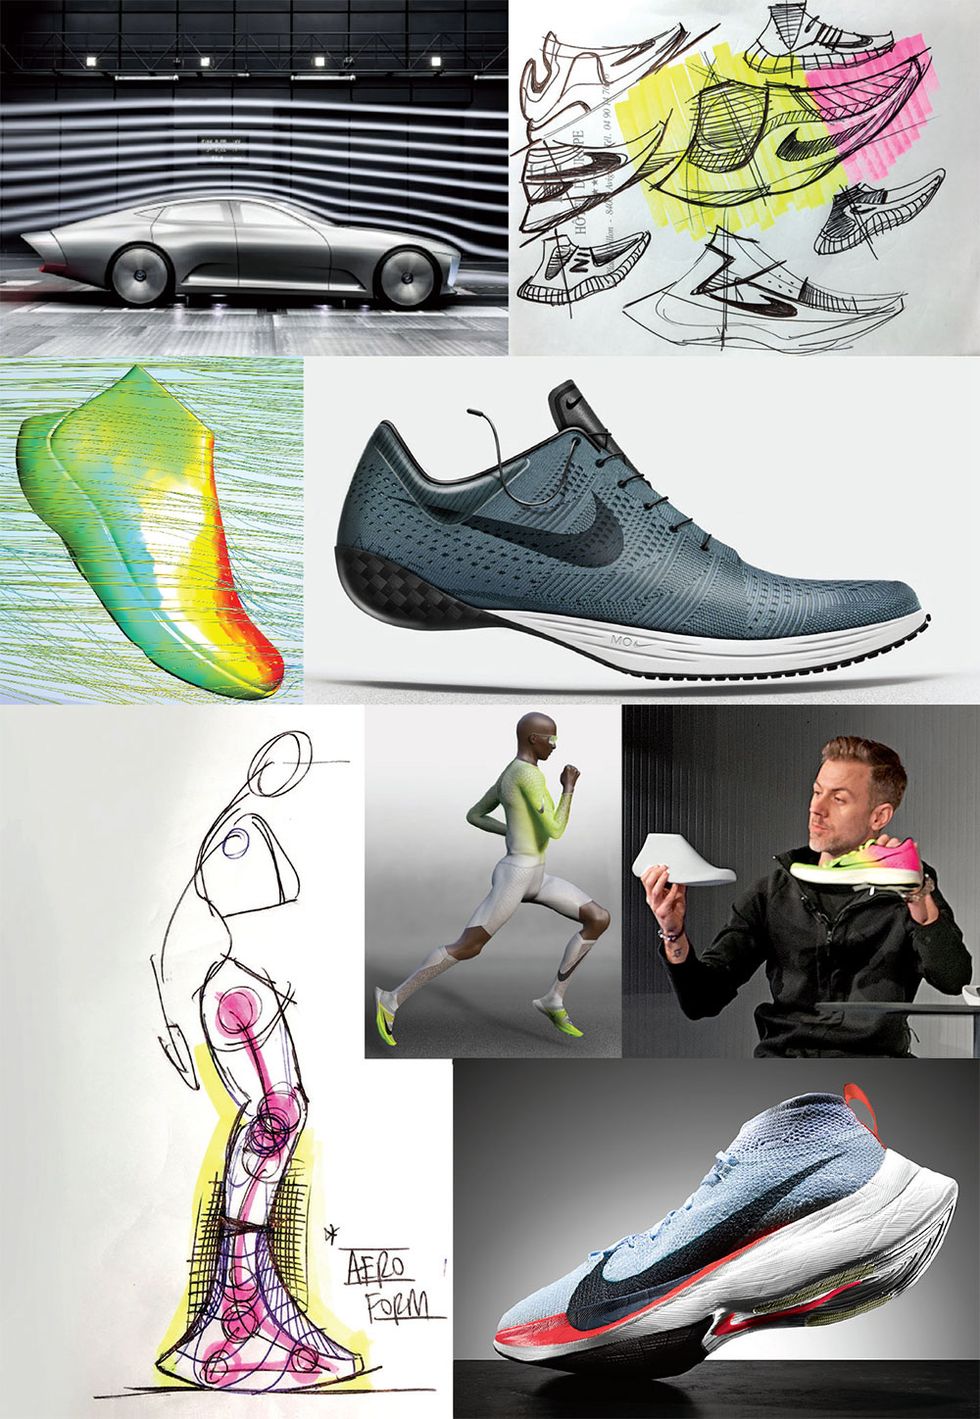 Nike running shoe innovation